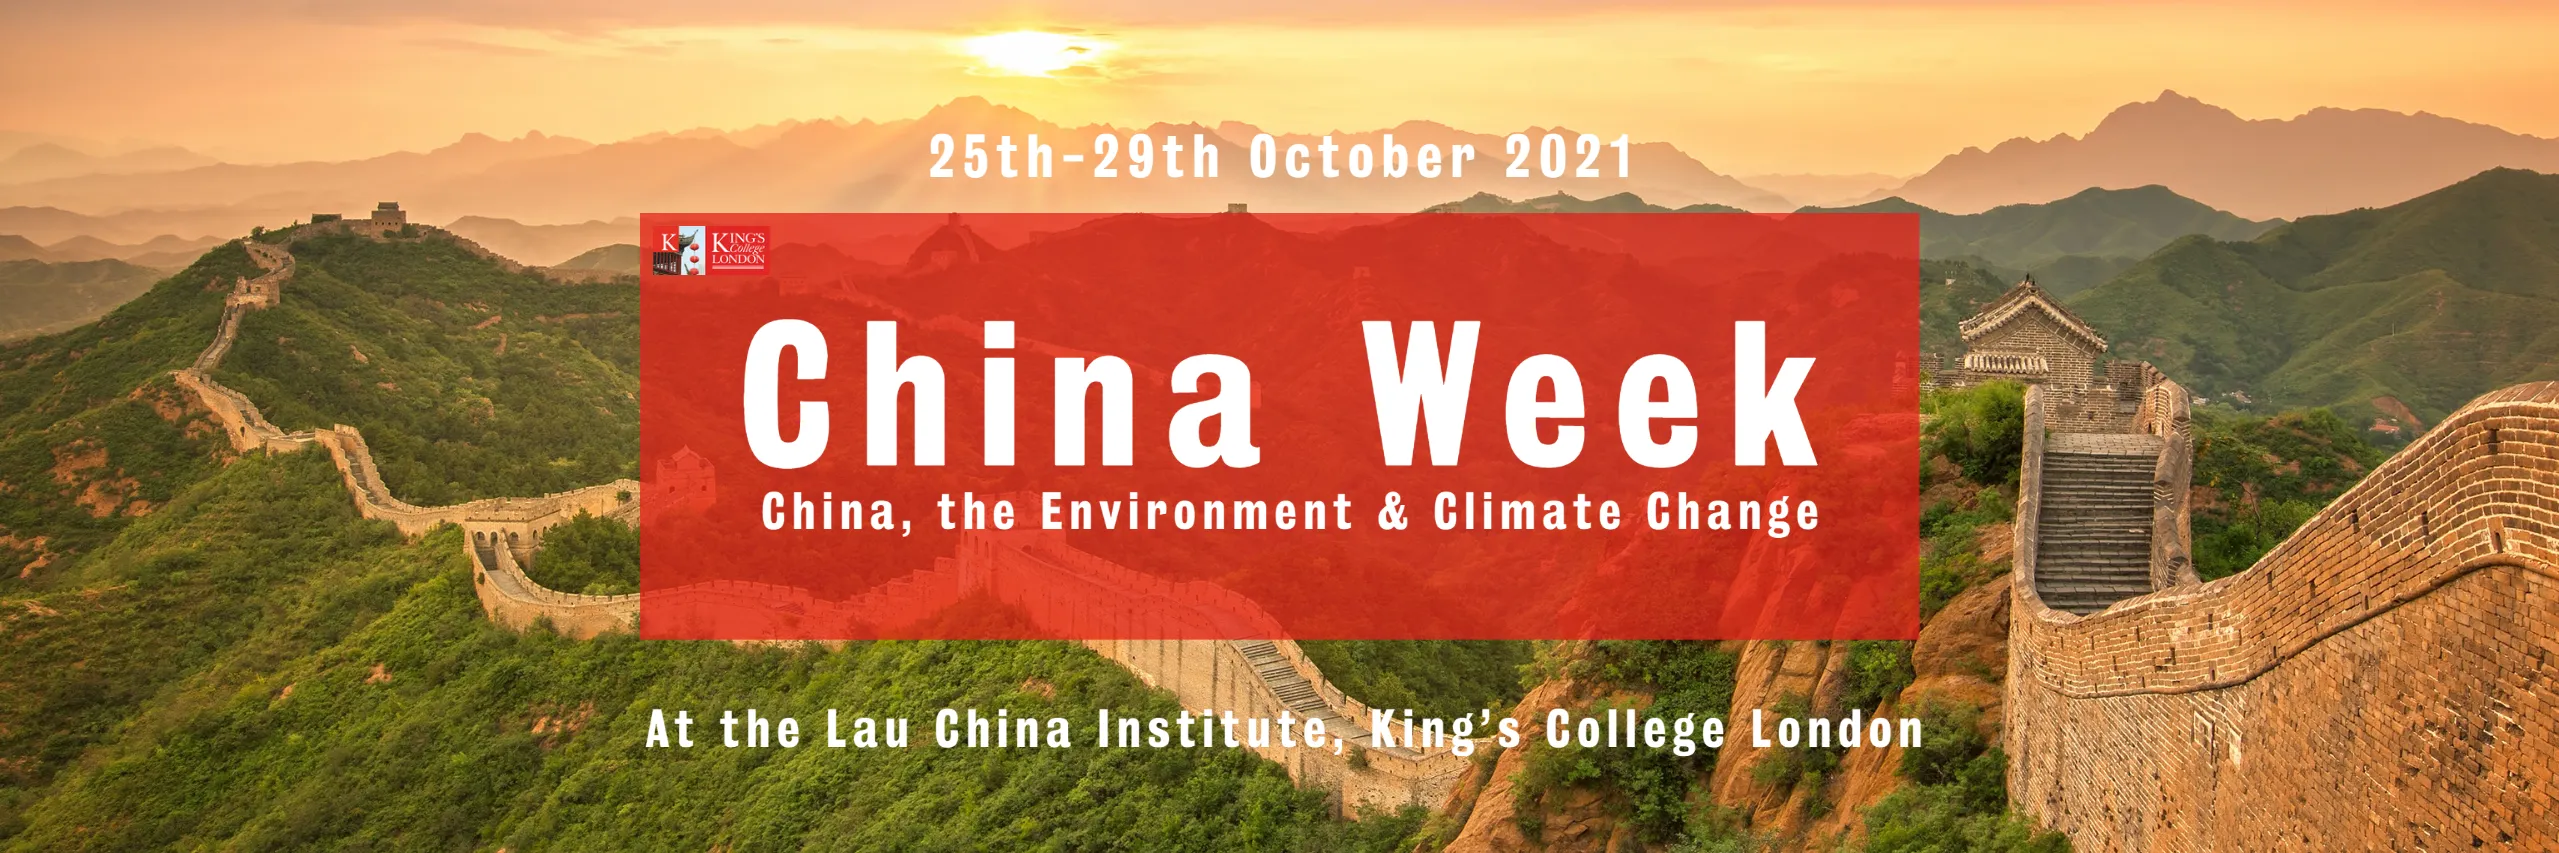 Website banner China week